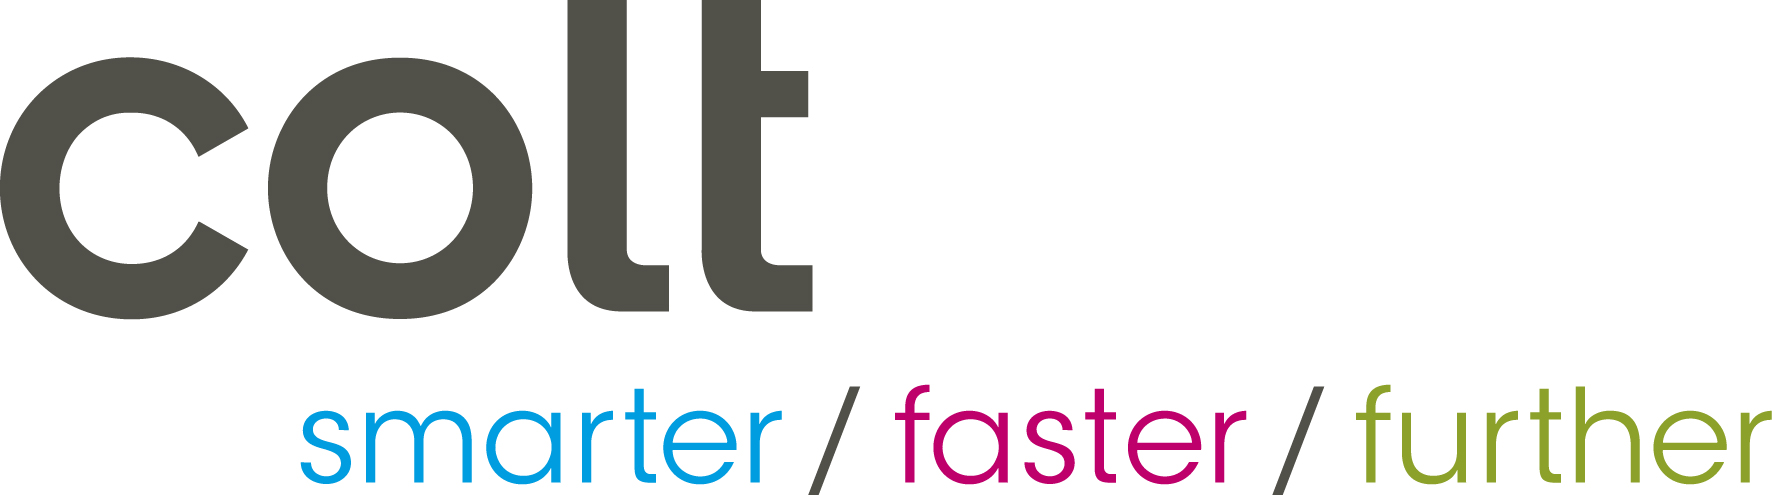 Faster farther. Компания Colt Telecom логотип. Ksu Colt.